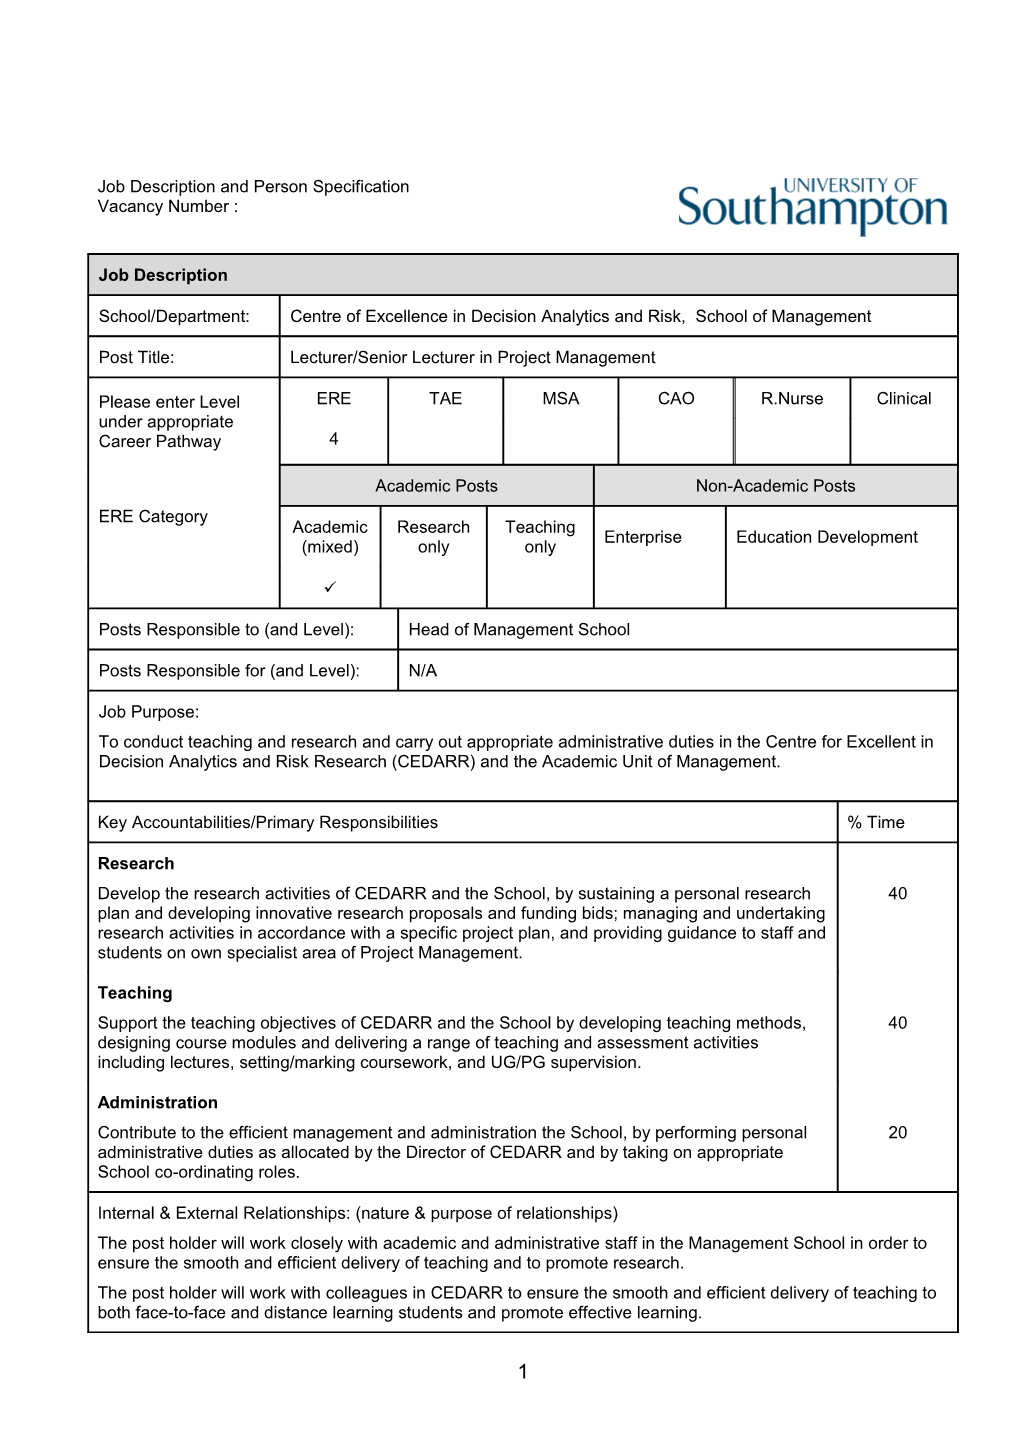 Job Description and Person Specification (4572-10-L)